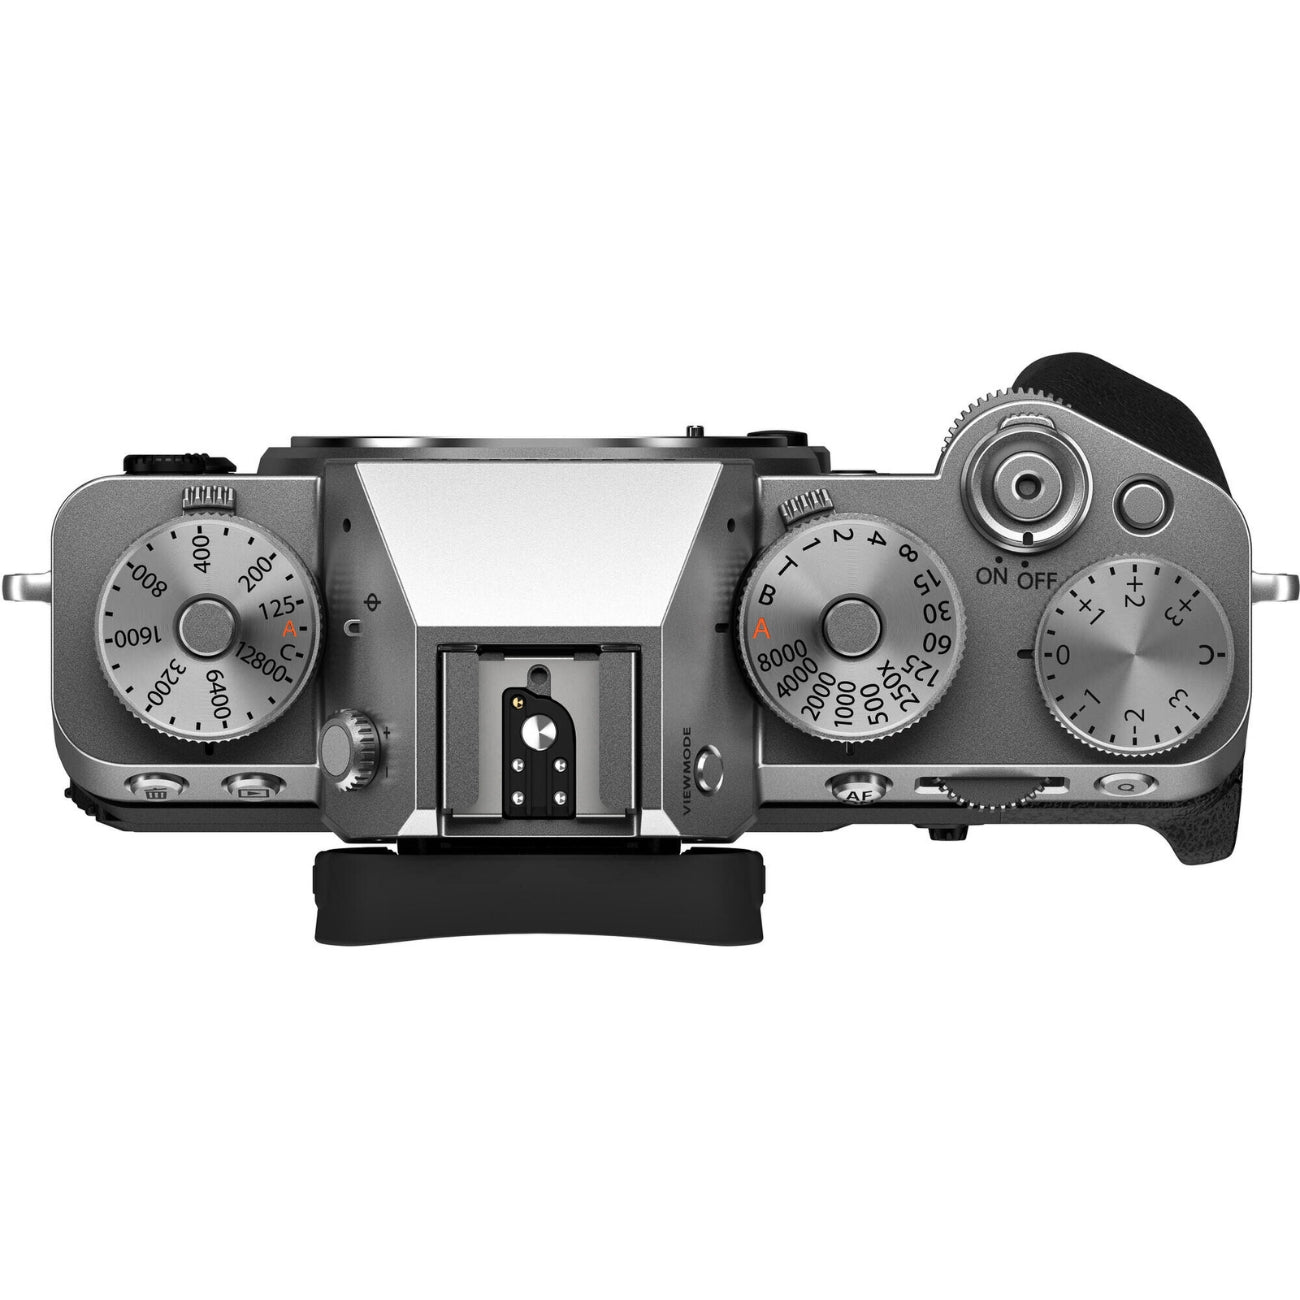 Fujifilm X-T5 Mirrorless Camera (Black & Silver)